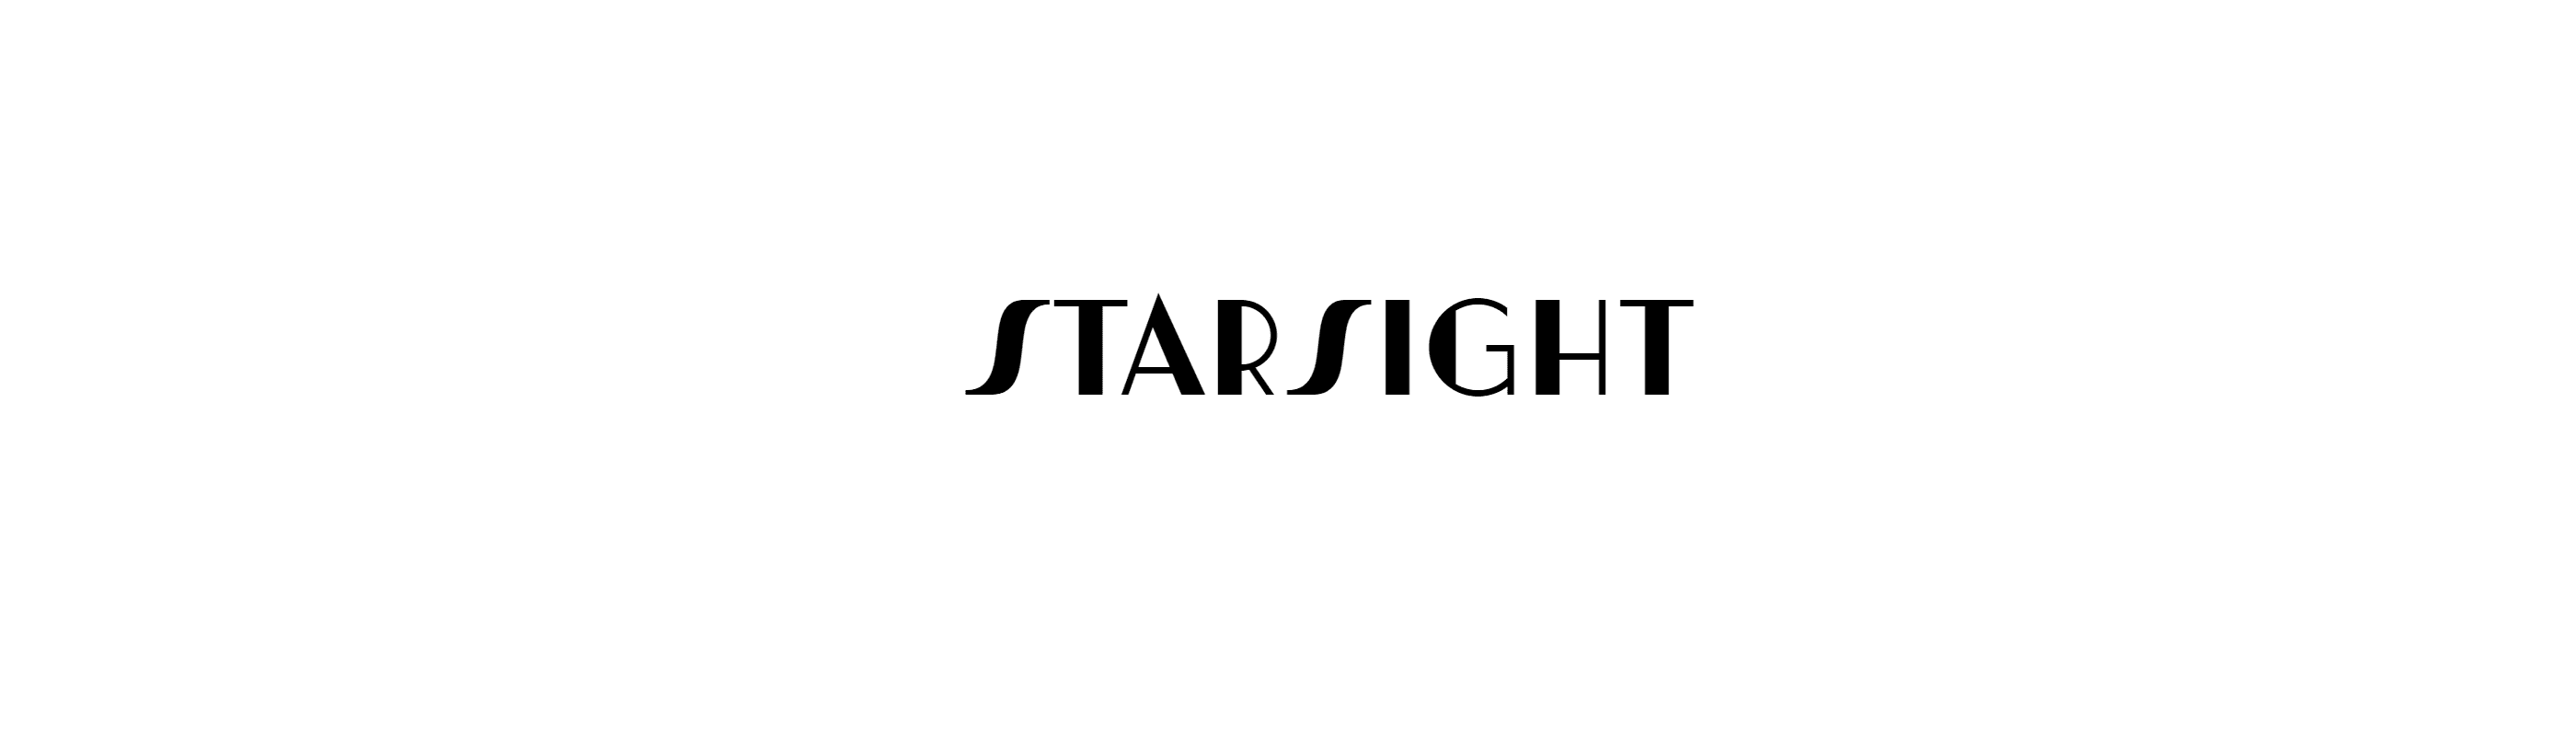 starsight 배너